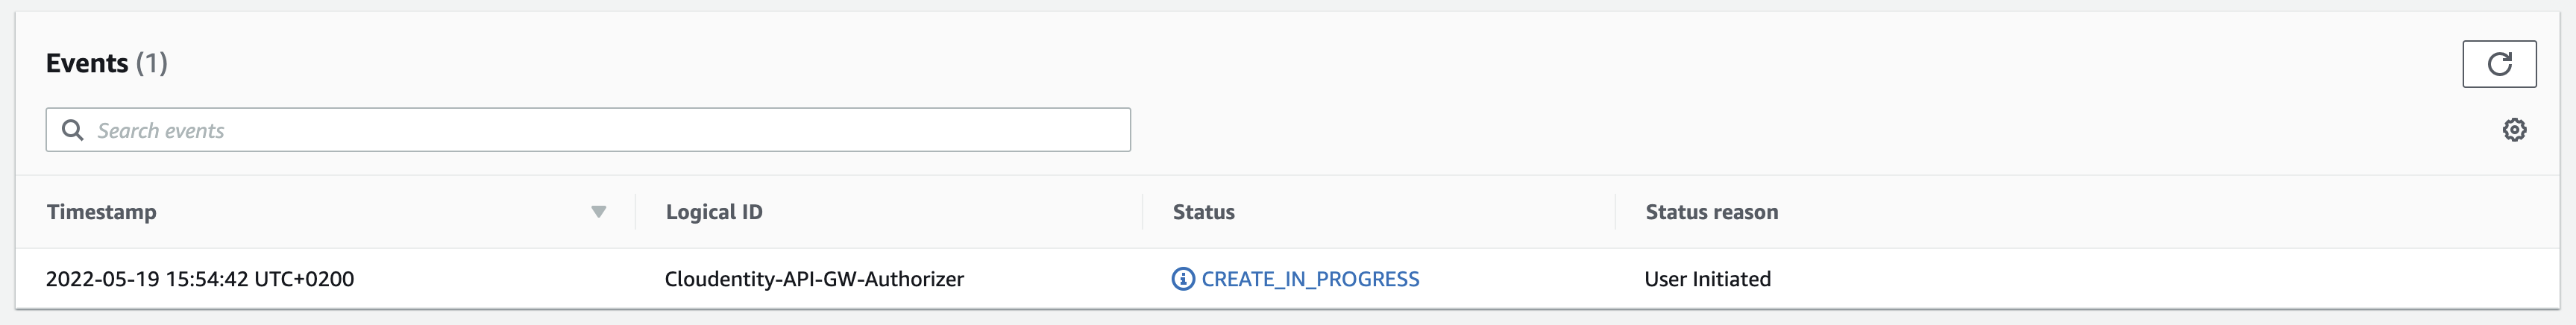 Create in progress status